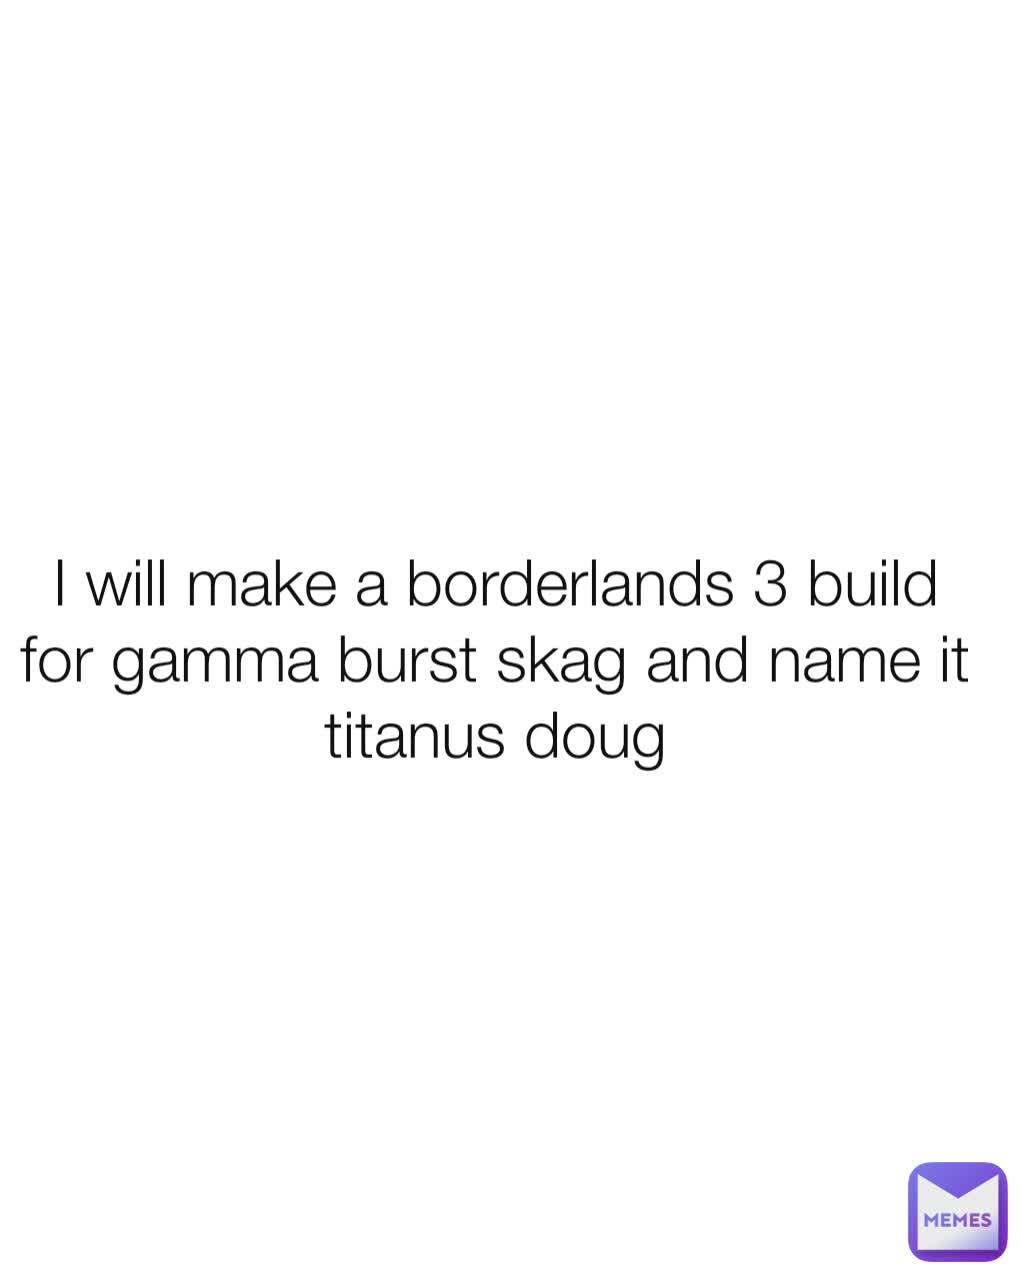 I will make a borderlands 3 build for gamma burst skag and name it titanus doug